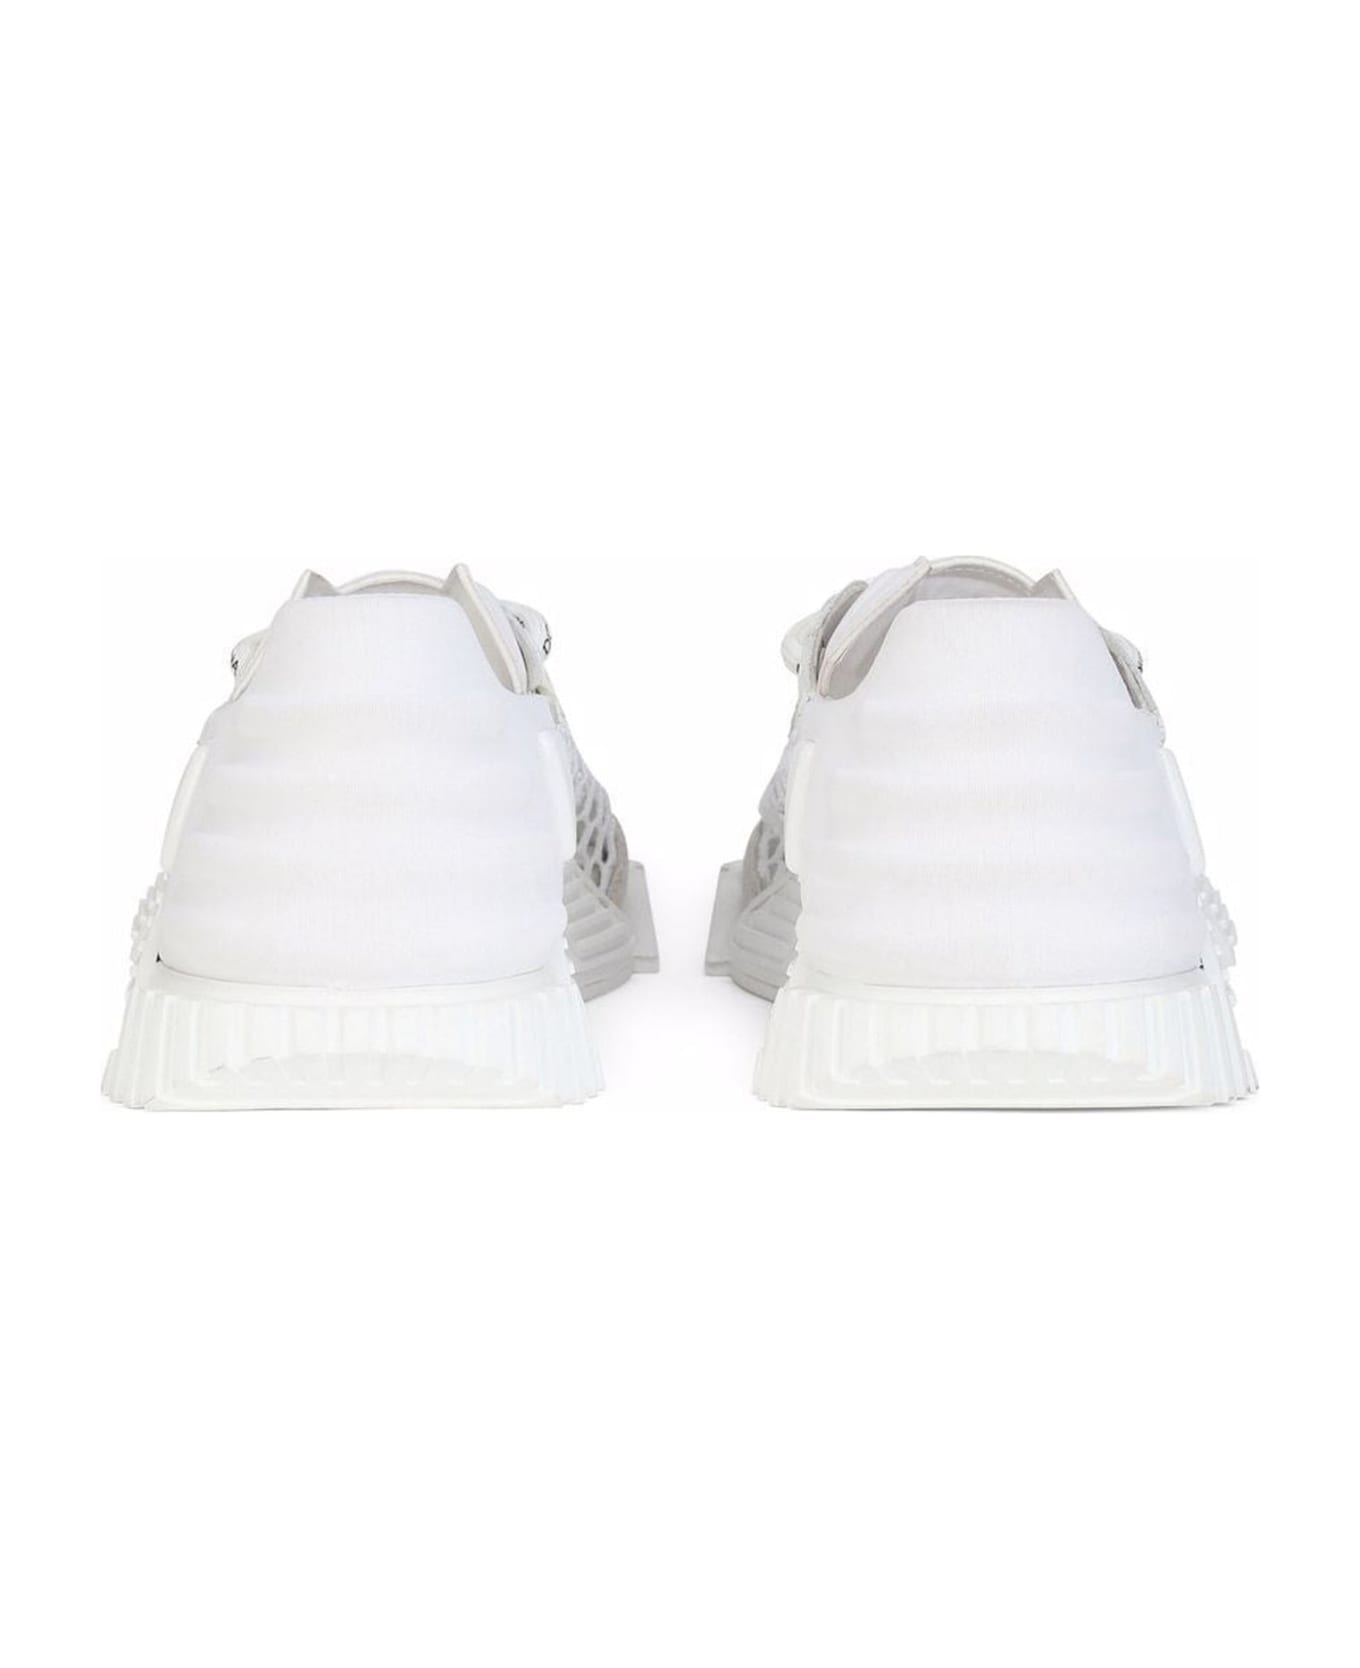 Dolce & Gabbana Ns1 Sneakers - White スニーカー